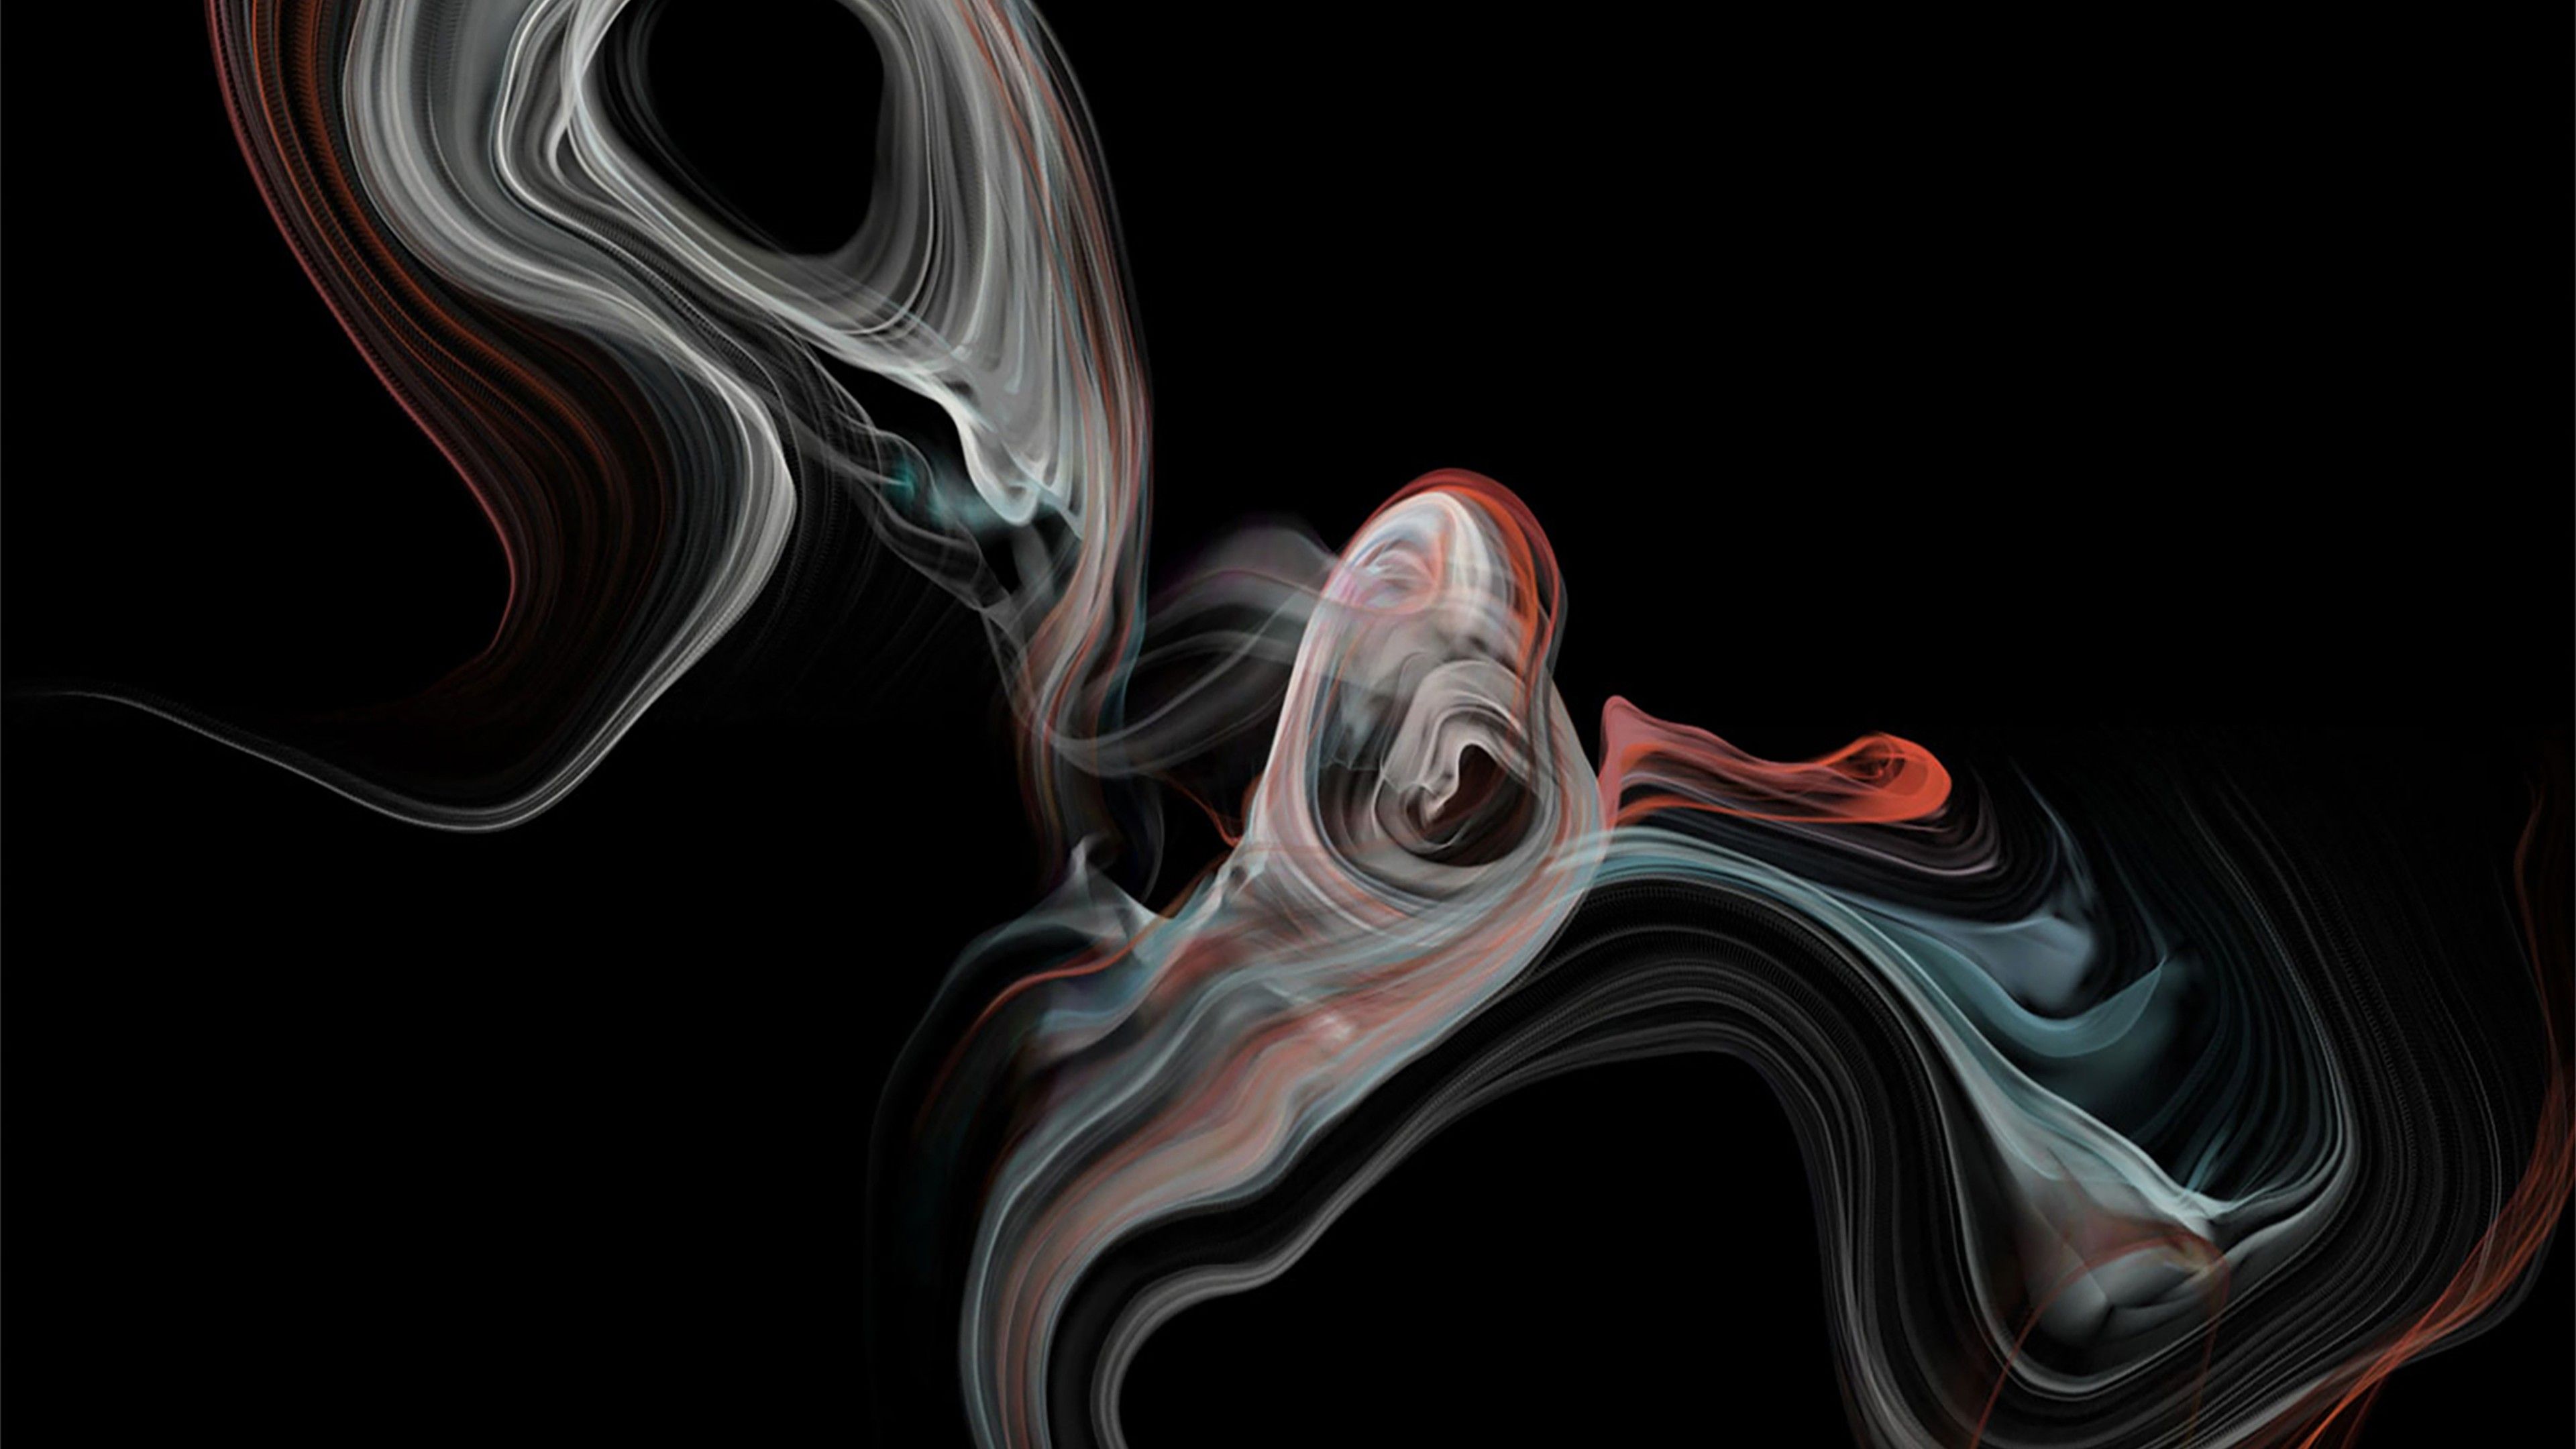 Wallpaper iMac Pro, Stock, Smoke, Abstract, Dark background, 4K